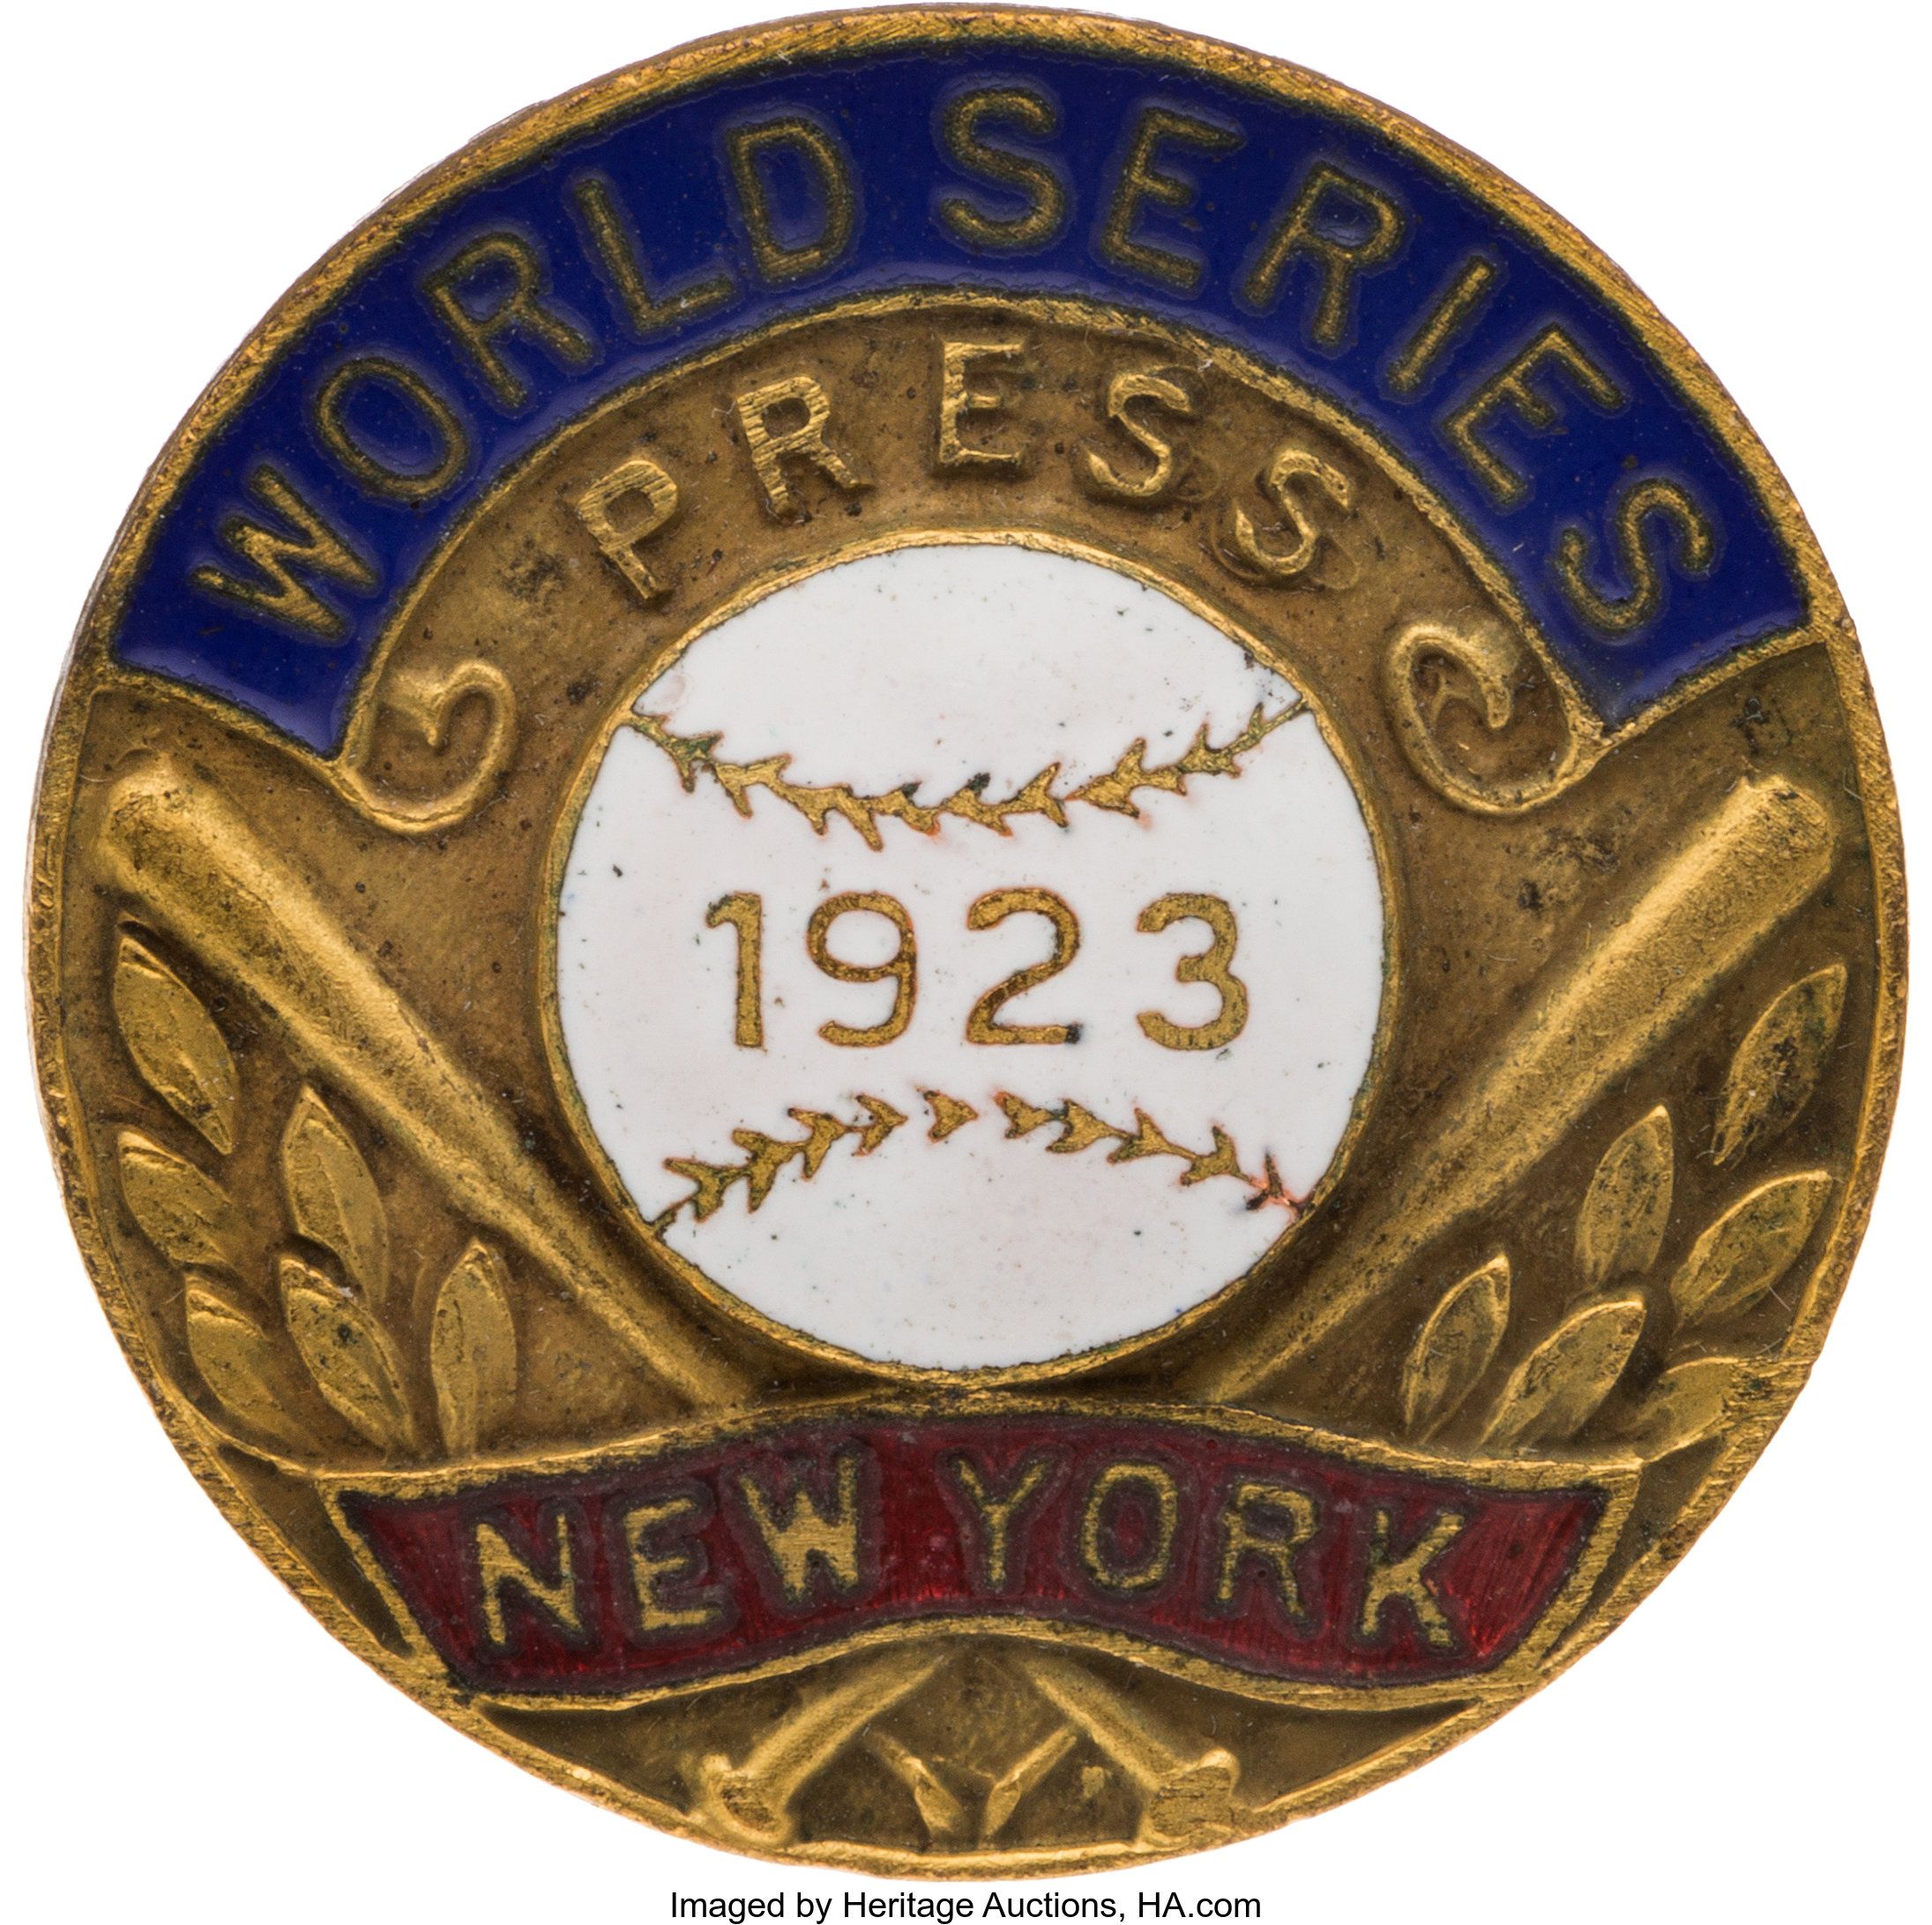 1923 World Series Commemorative Pin - Yankees vs. Giants